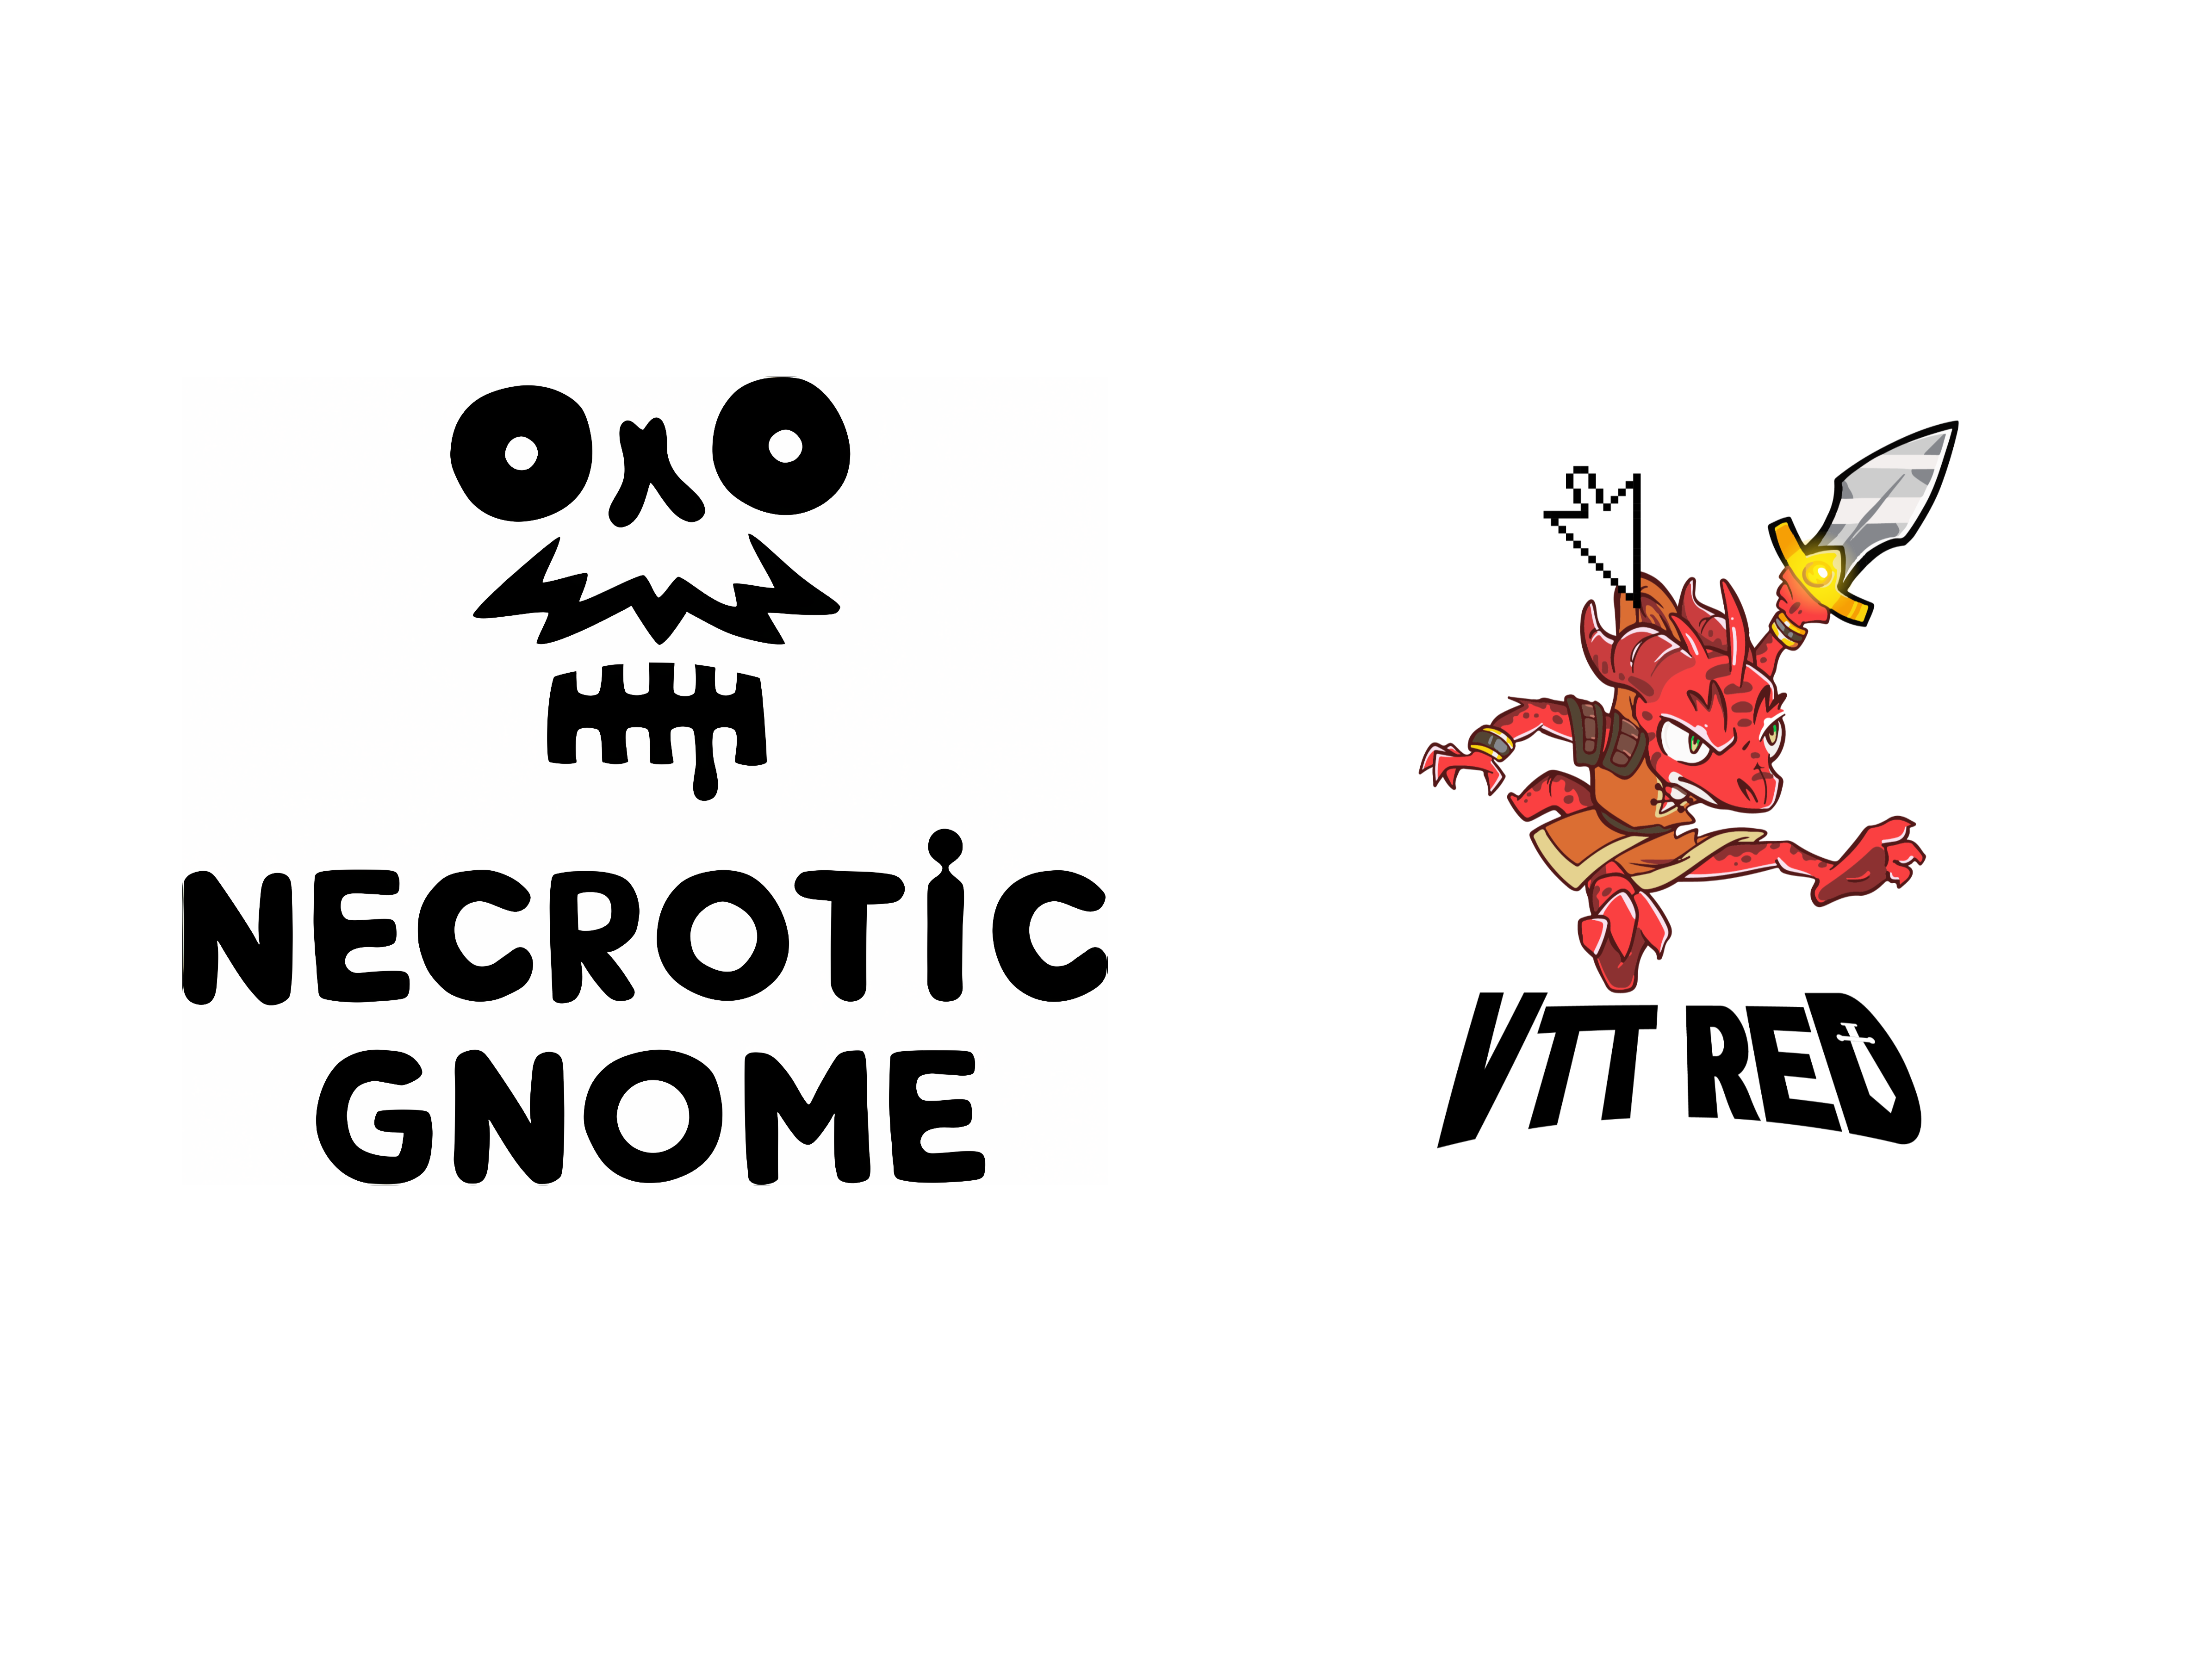 Necrotic gnome logo and VTT Red logo